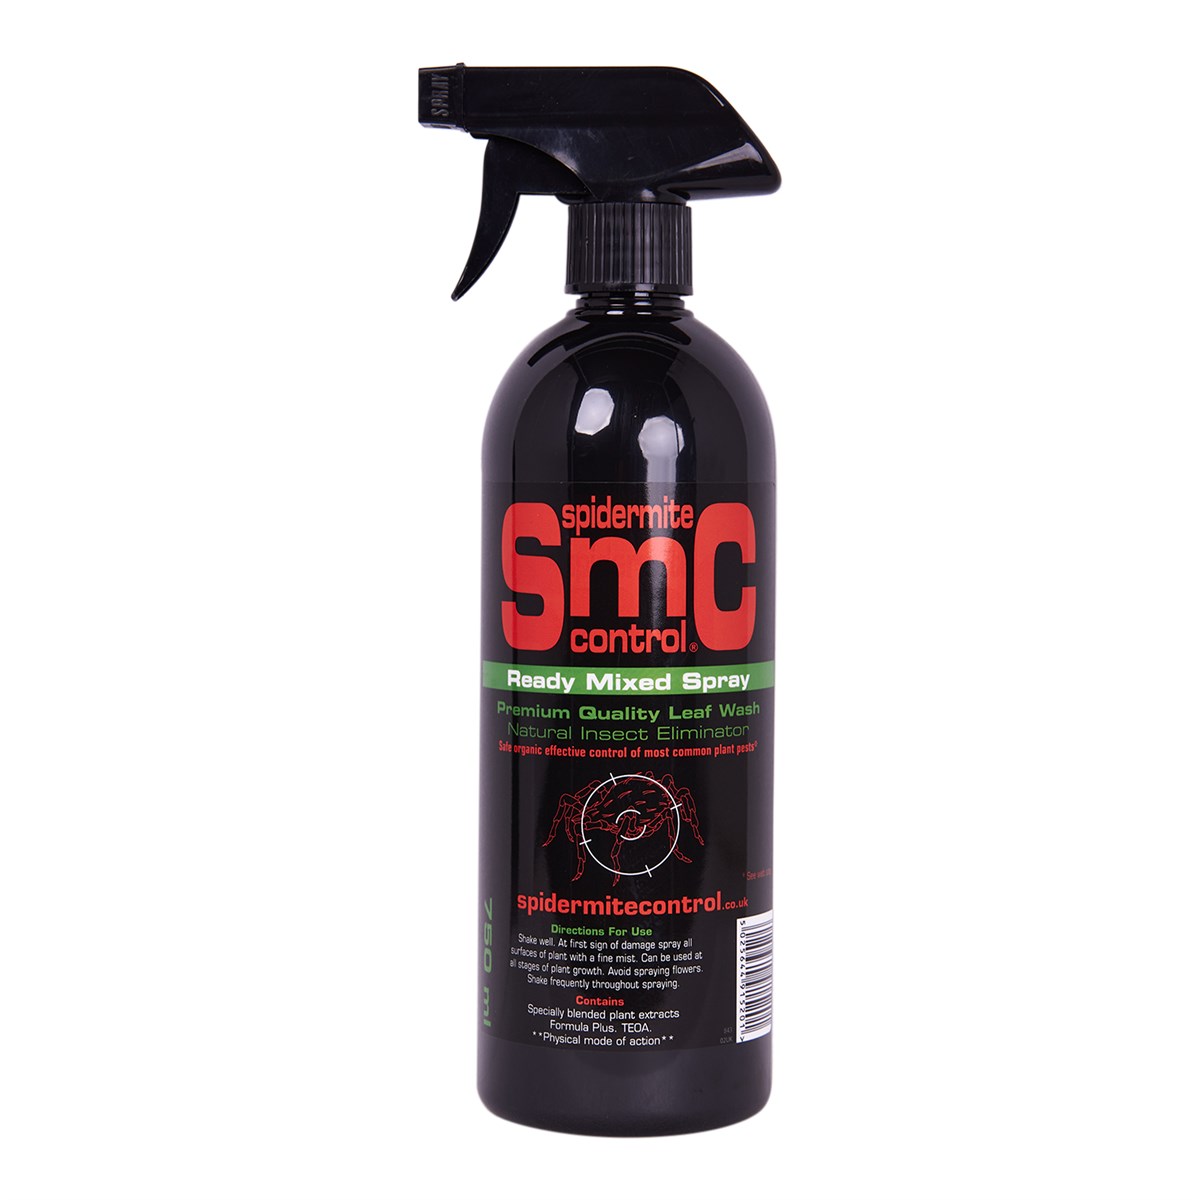 SMC Spidermite Control-concentraat